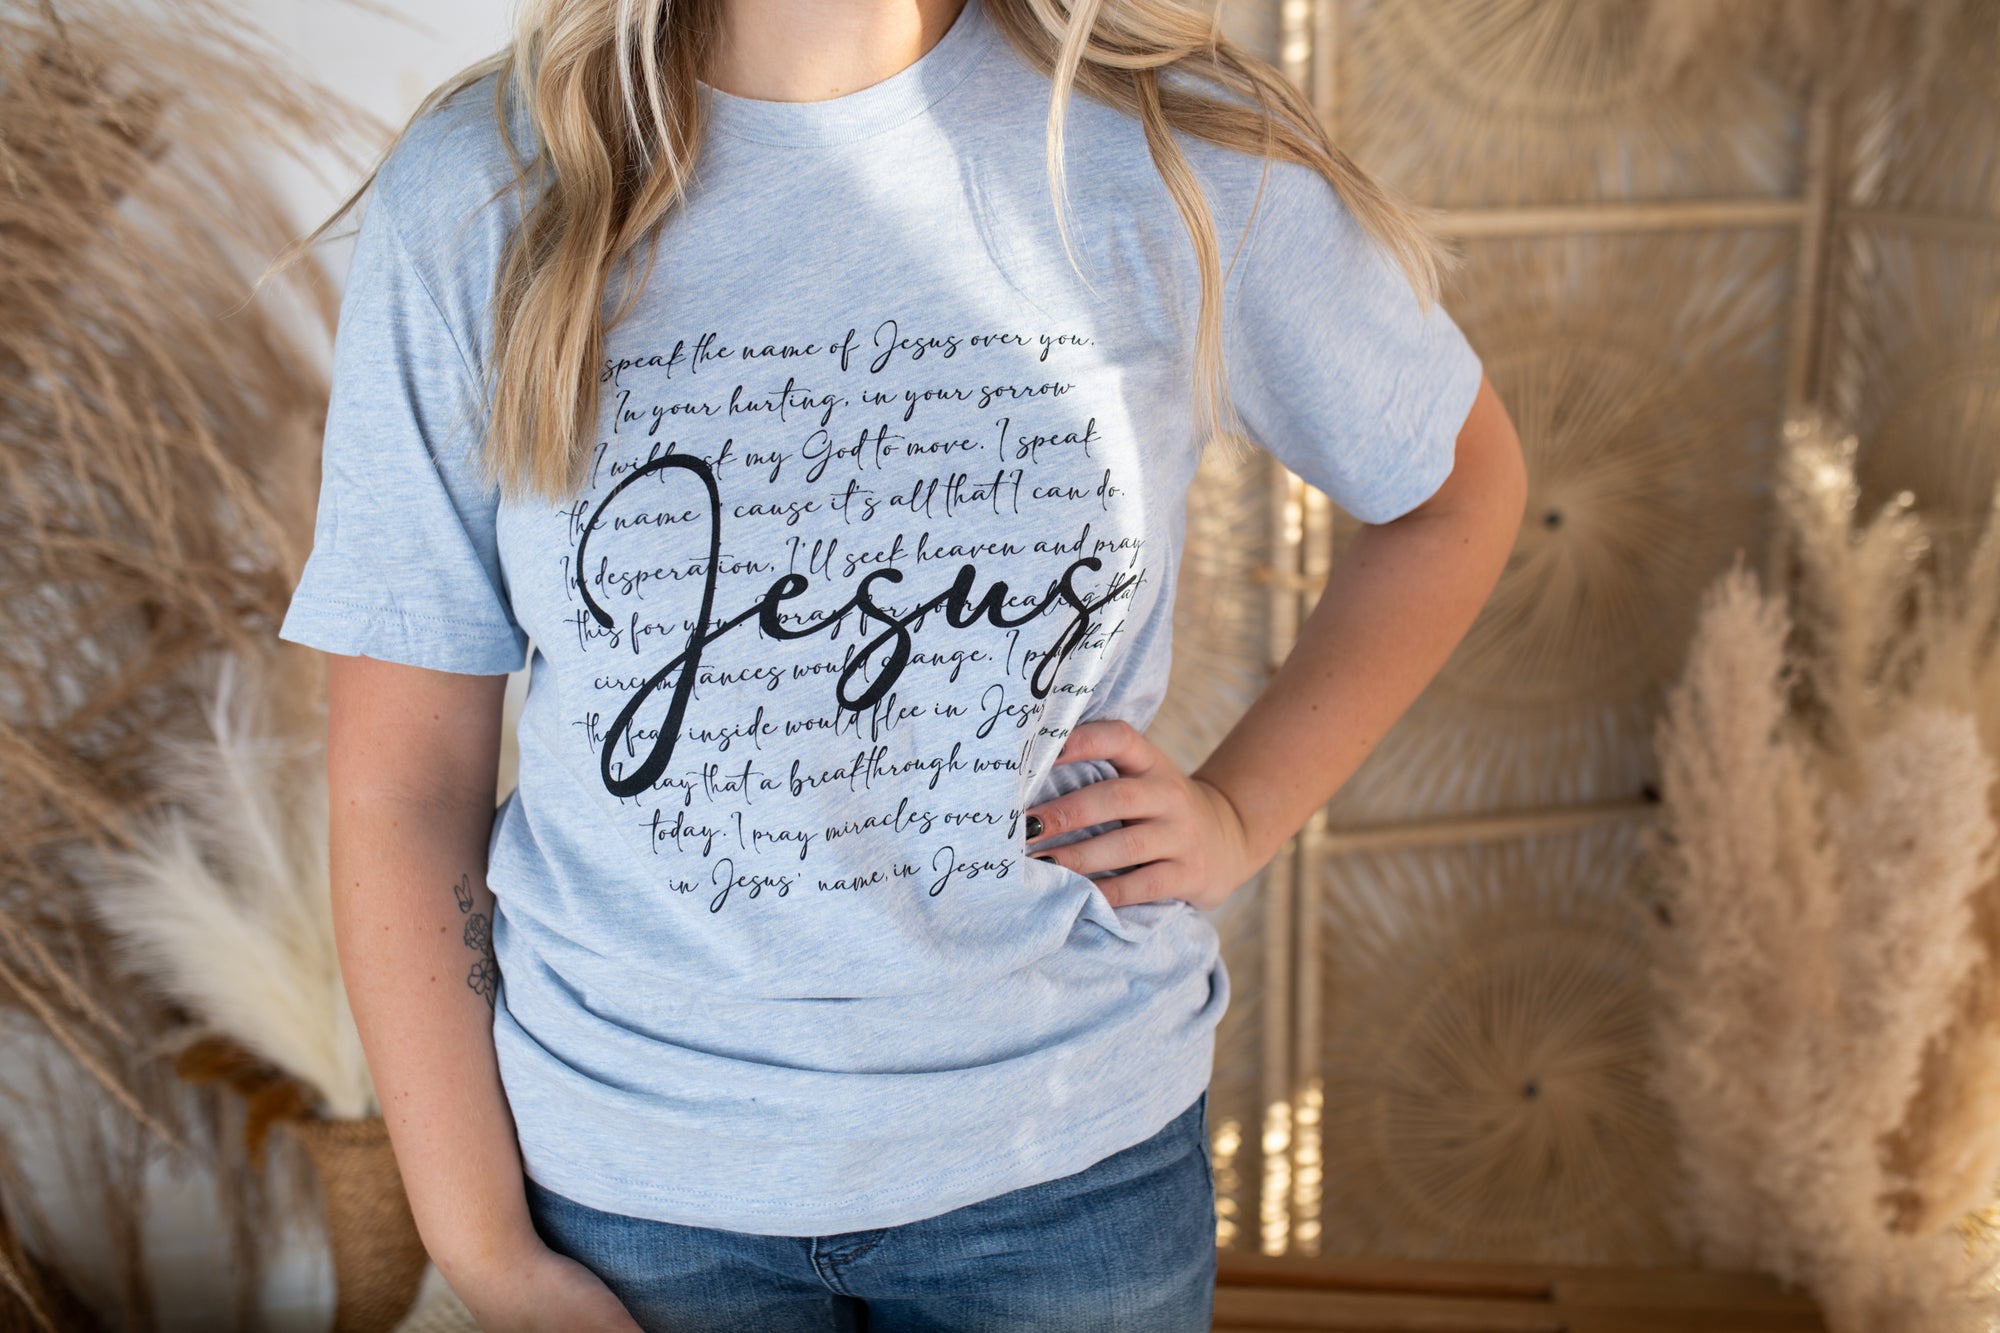 "Speak the Name of Jesus" Short Sleeve Graphic Tee